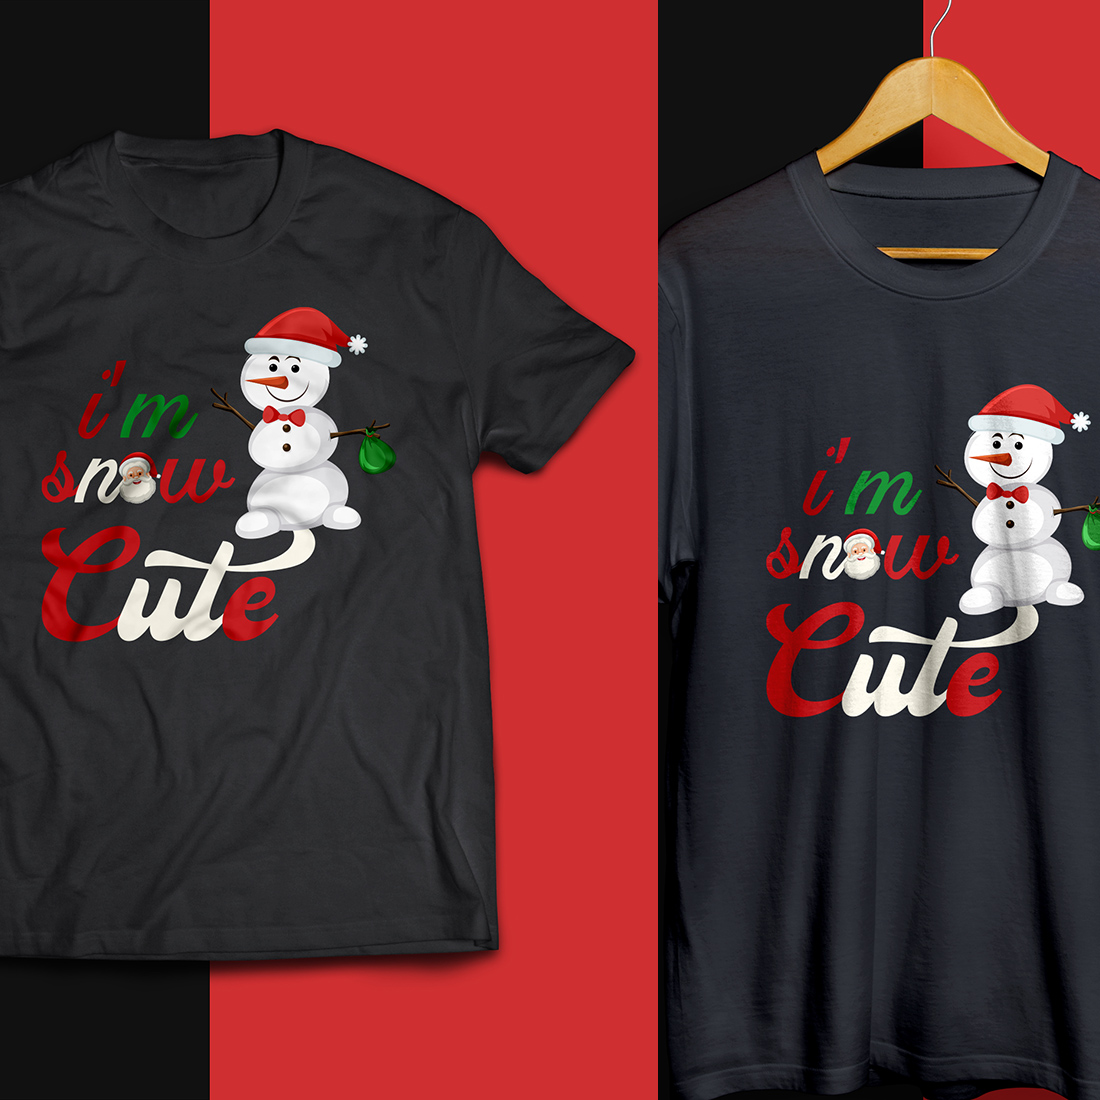 Cute Christmas T-shirt Snowman Design cover image.